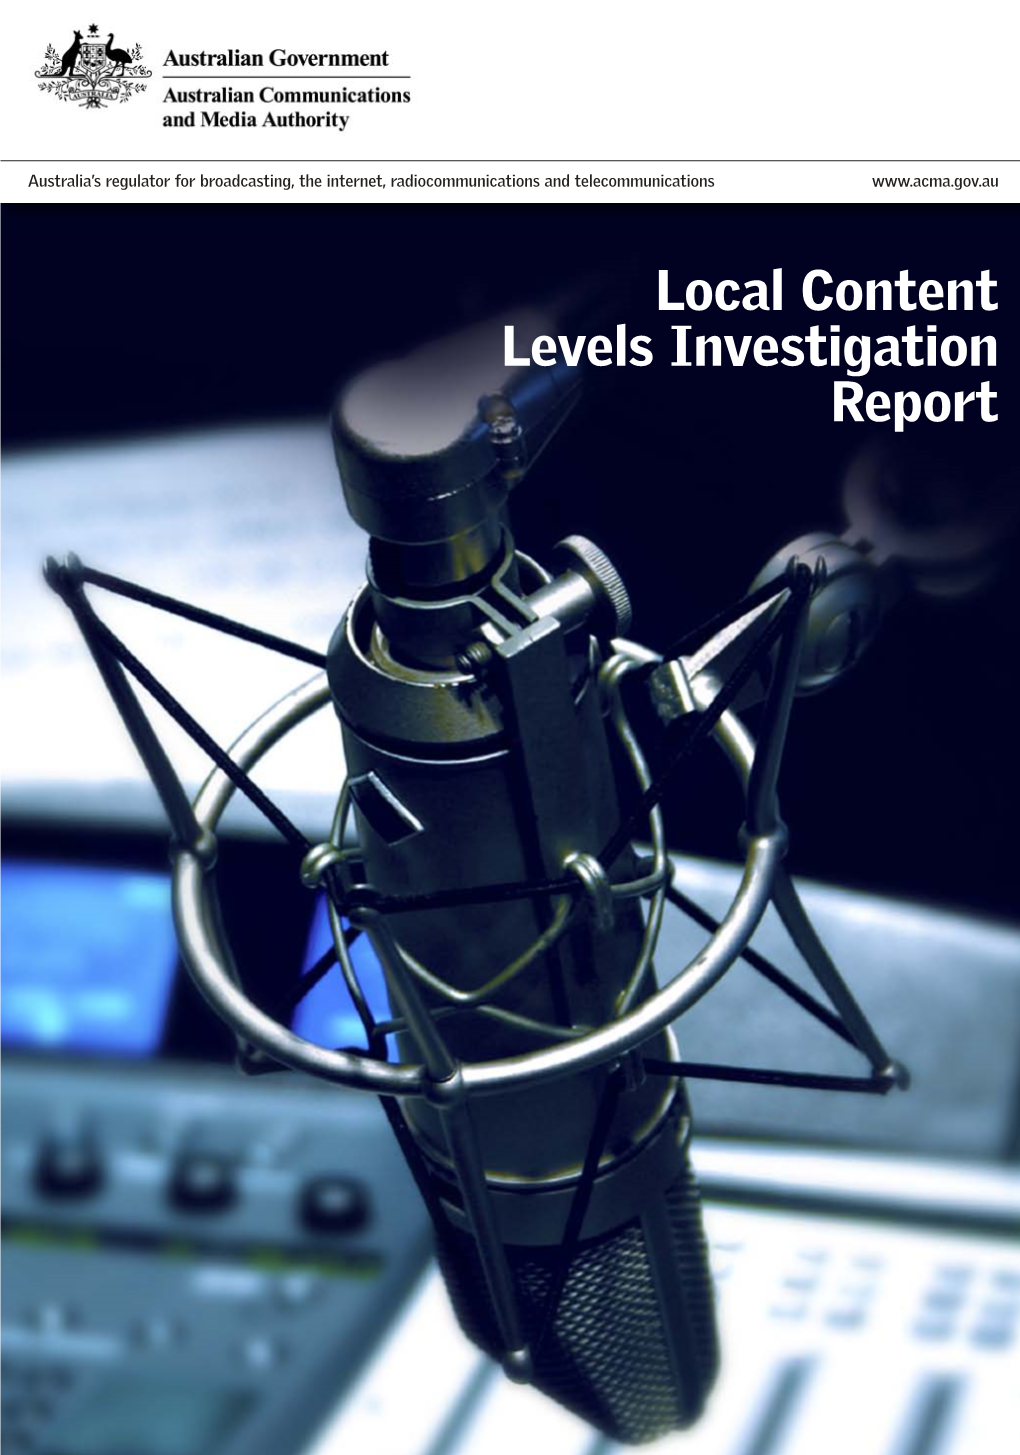 Read ACMA's "Local Content Levels Investigation Report"